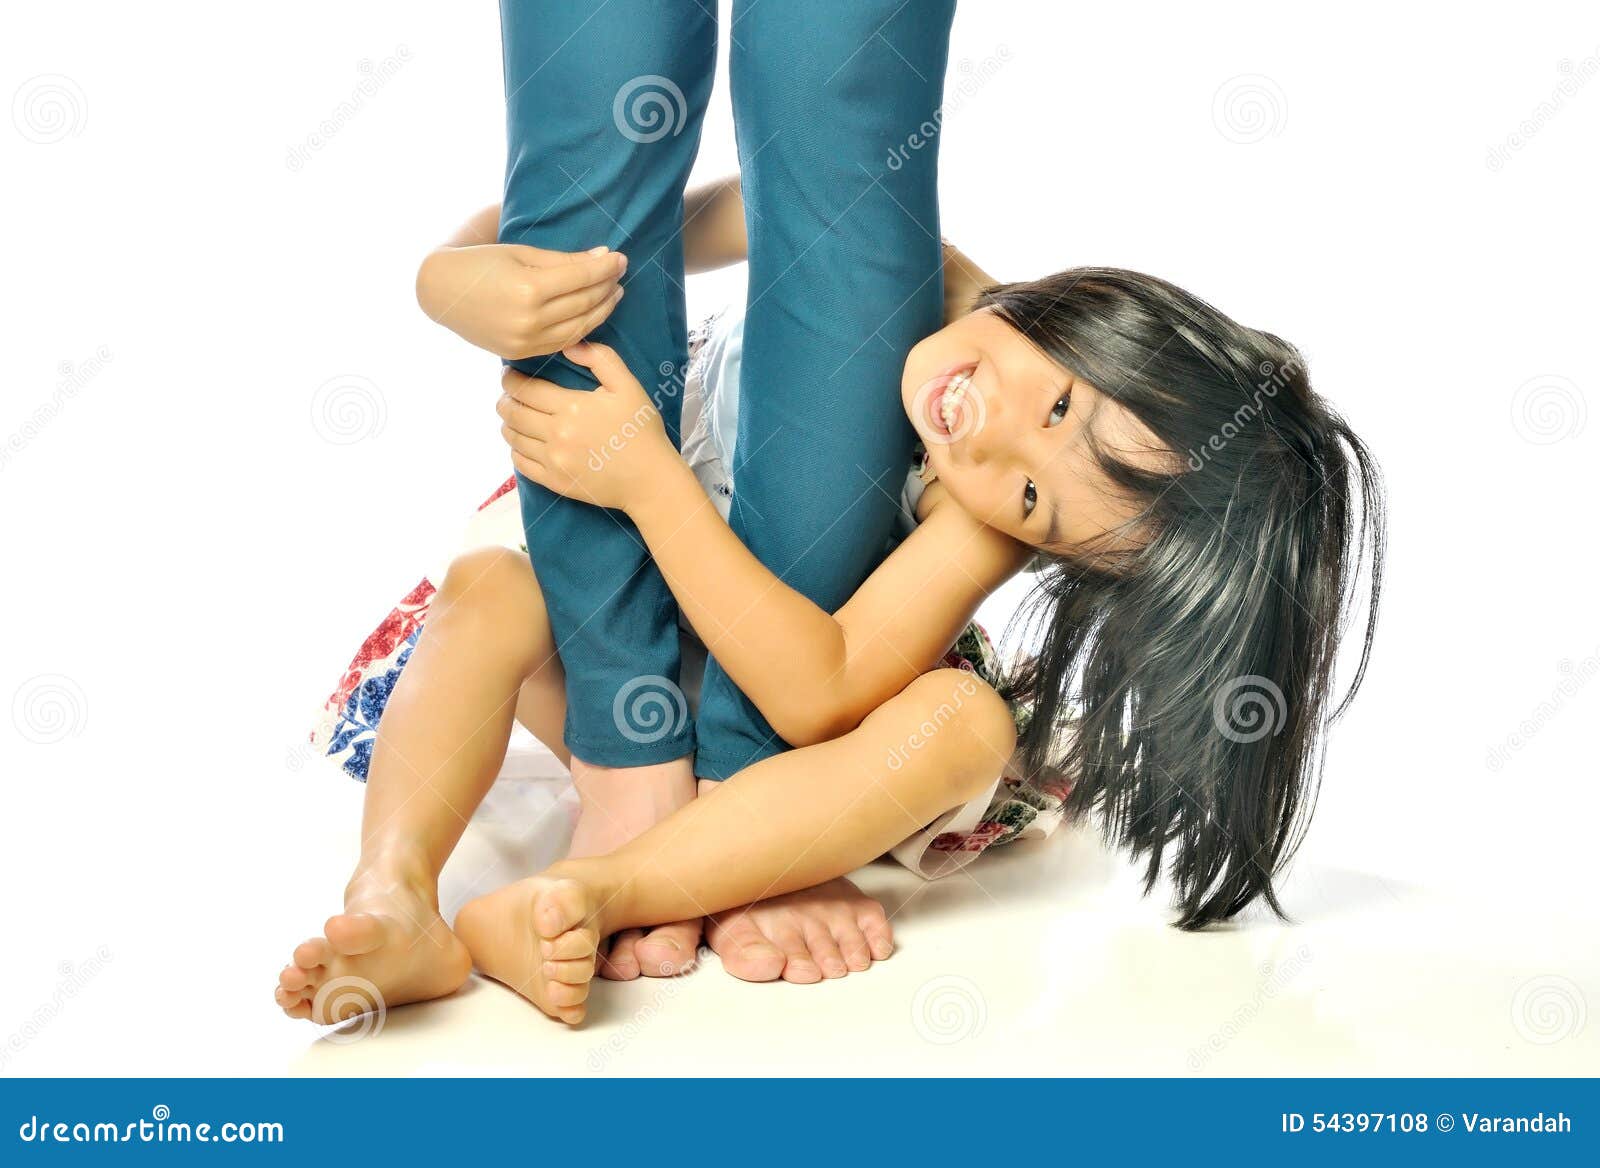 Девушка обнимает ноги. Ребенок обнимает за ногу. Девочка обняла ногами. Обнимает за ноги. Девочка обнимает за ногу мамы.